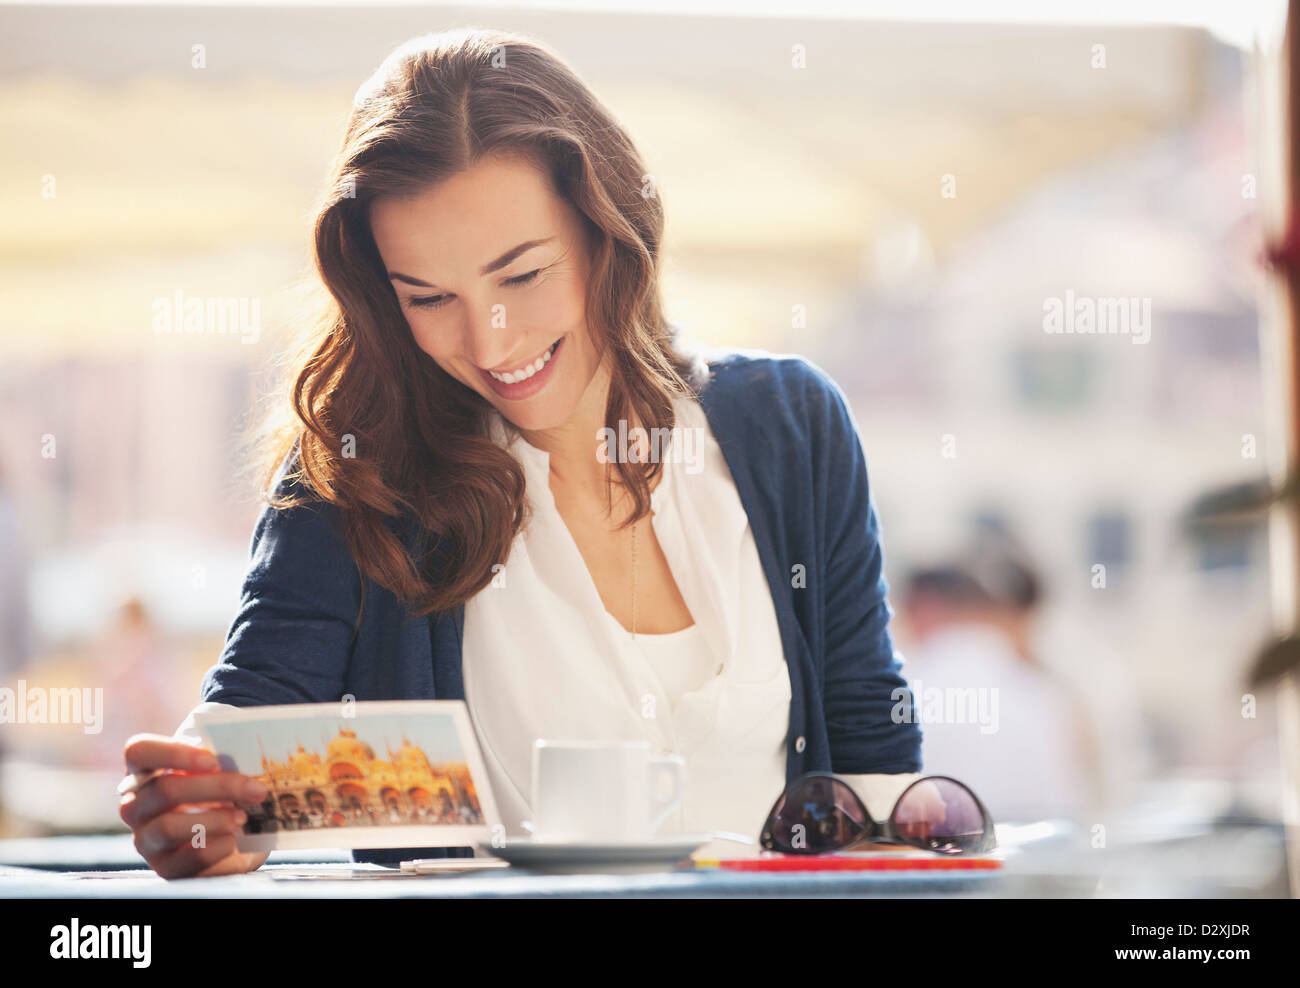 Smiling woman reading postcard at sidewalk cafe Stock Photo